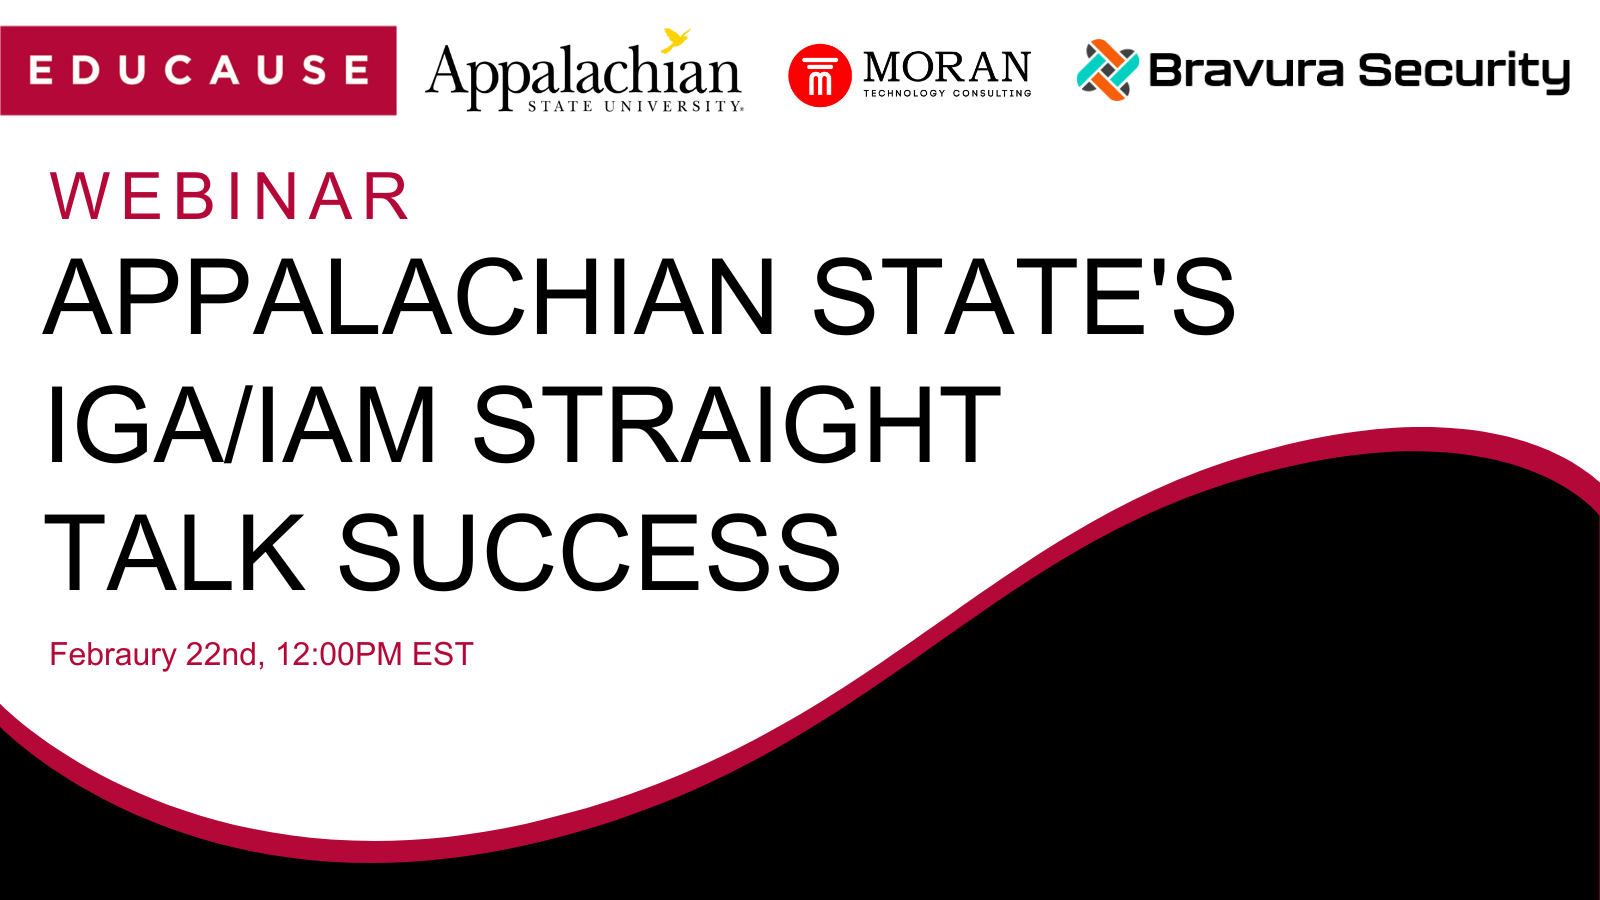 EDUCAUSE: Appalachian State's IGA/IAM Straight Talk Success